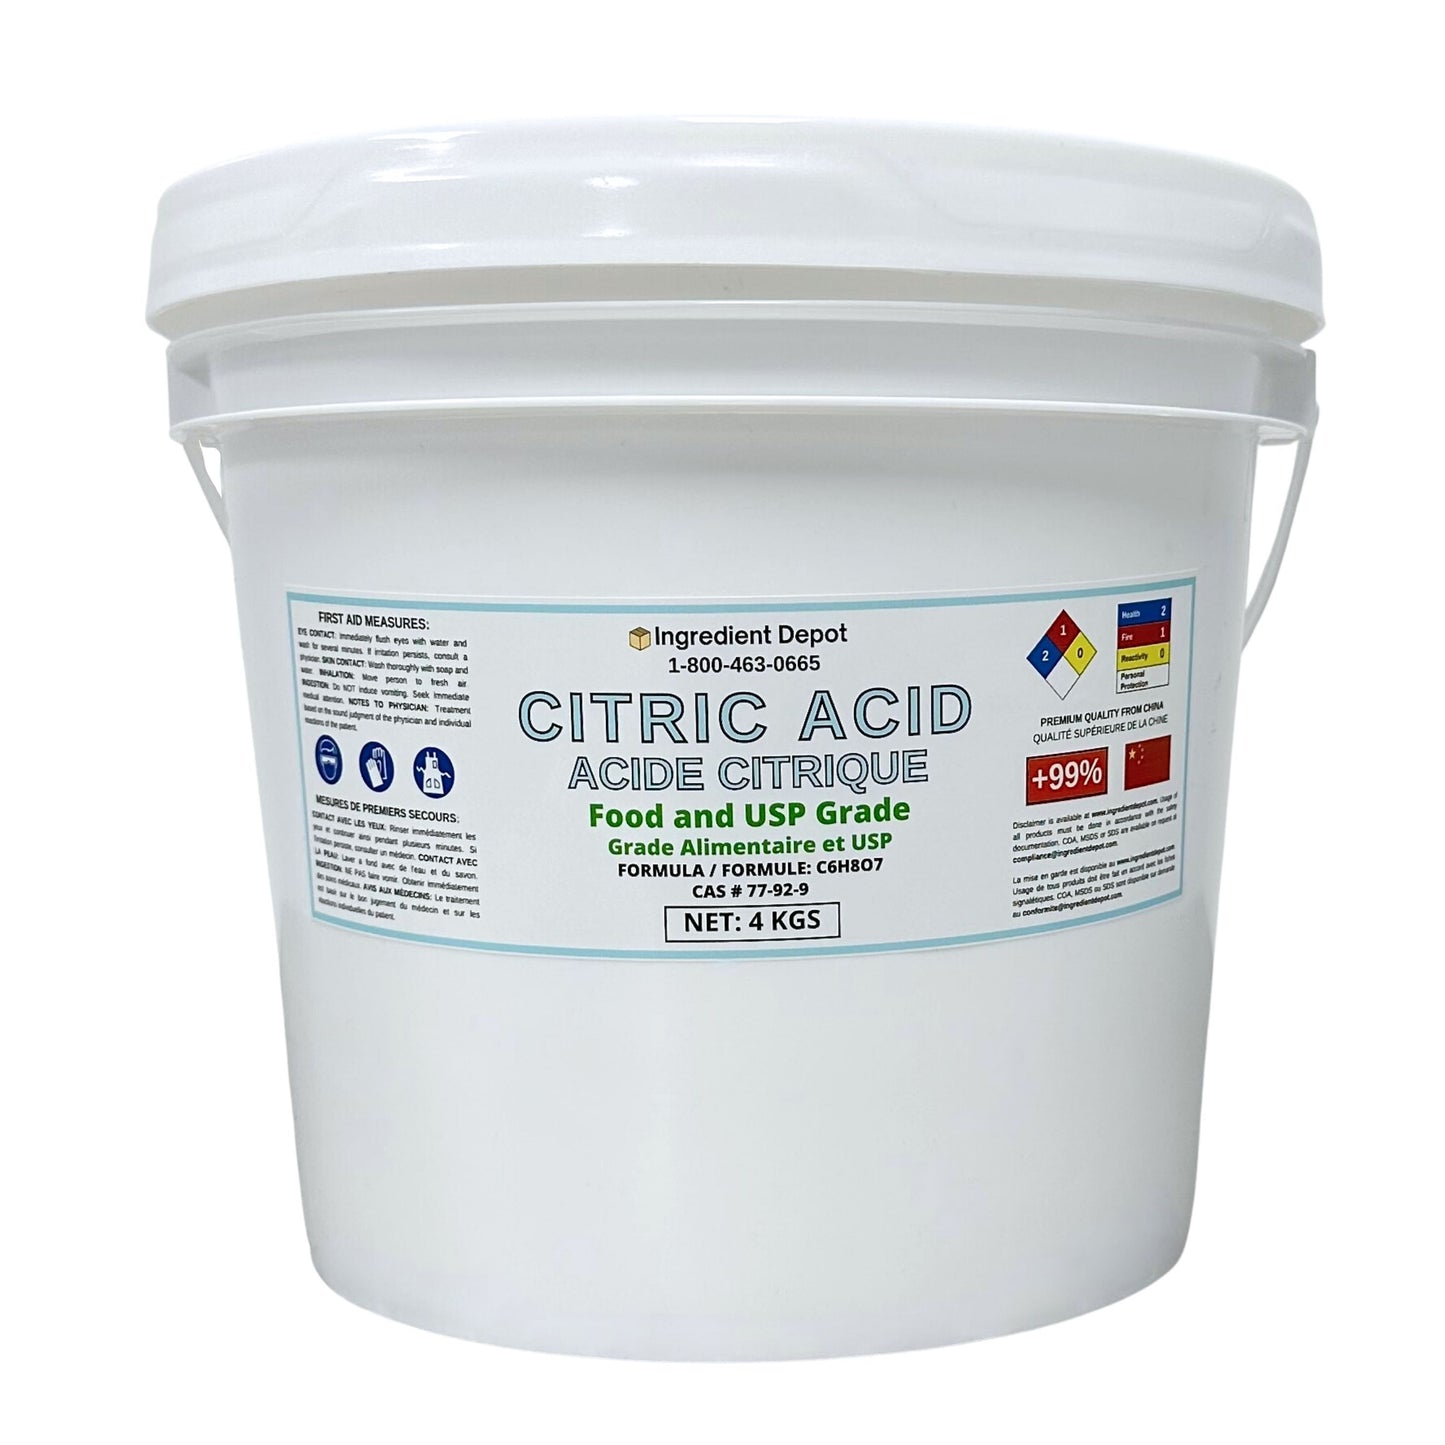 Citric Acid Food and USP Grade (China) 4 kgs - IngredientDepot.com